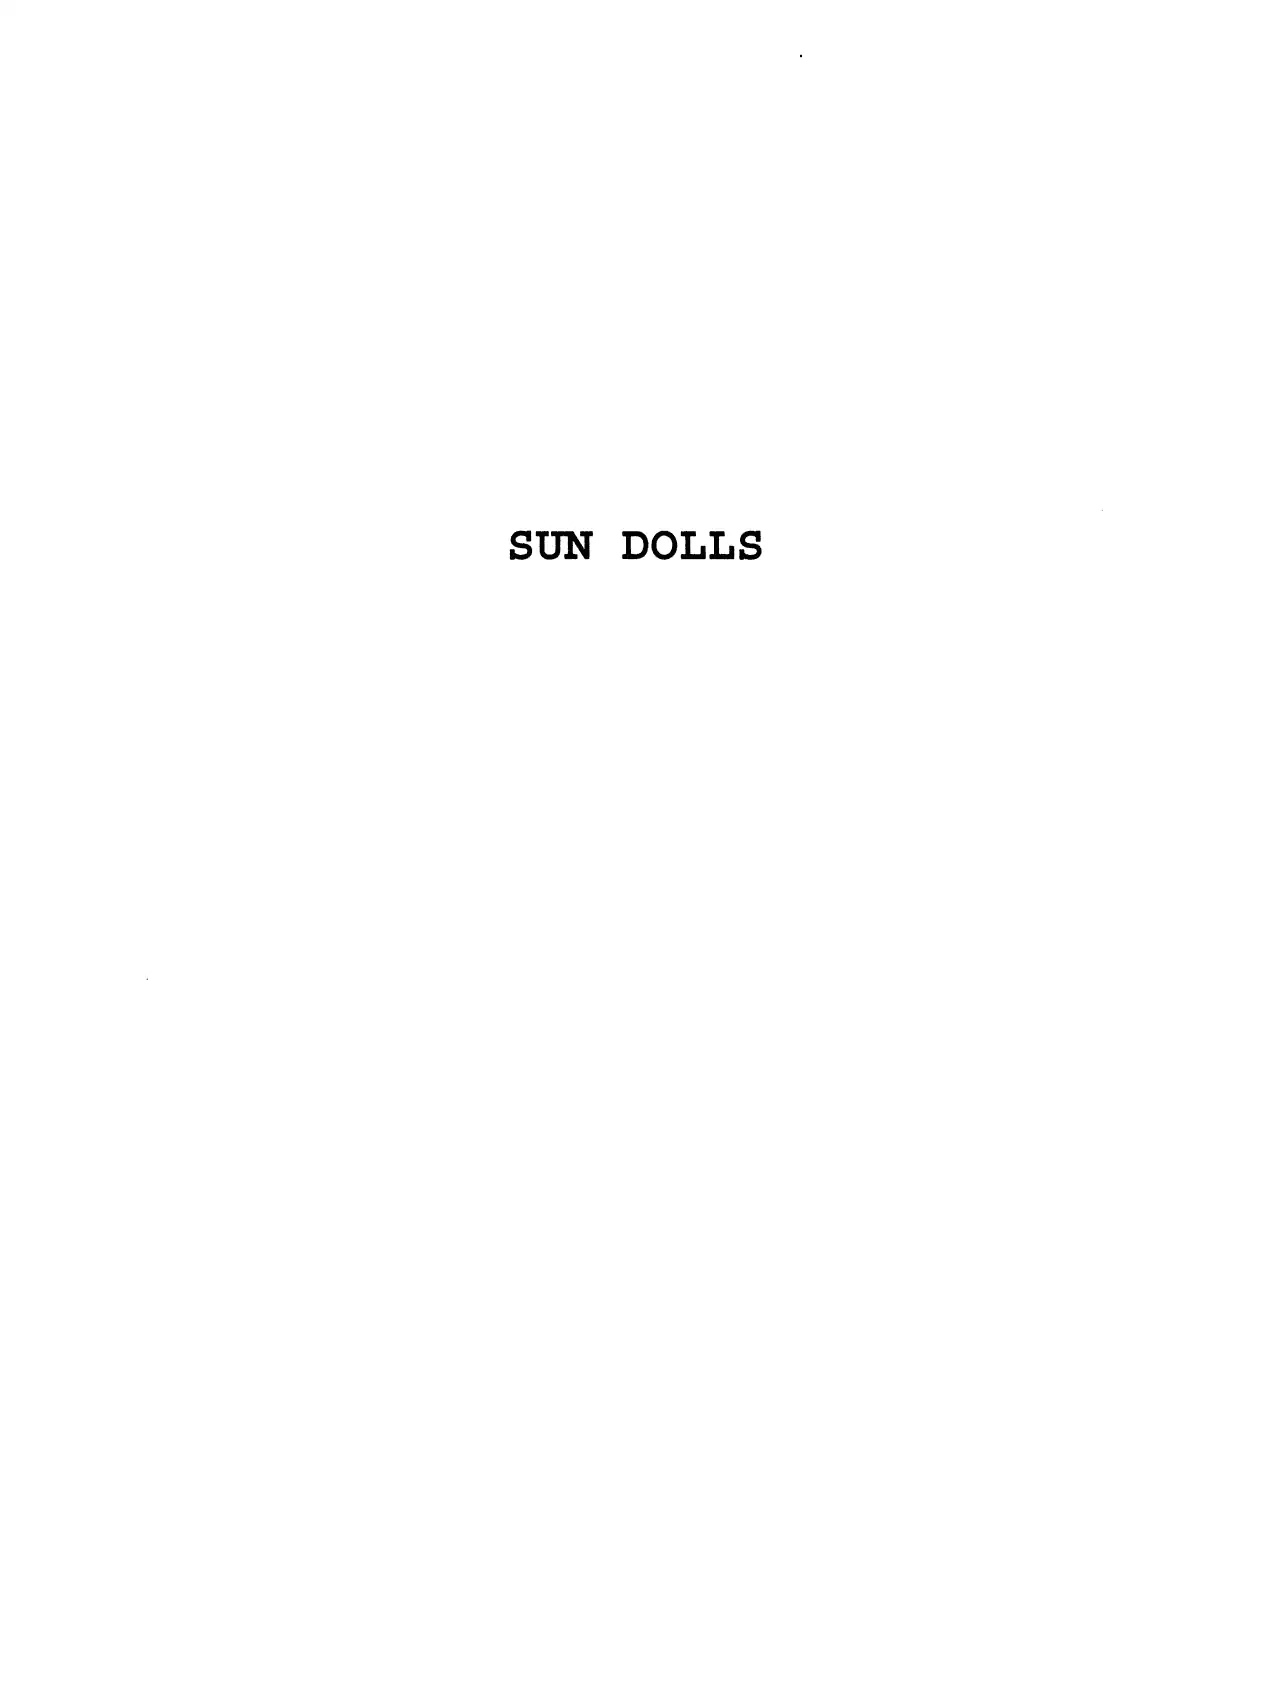 Black Jack Vol.9 Chapter 12: Sun Dolls - Picture 1